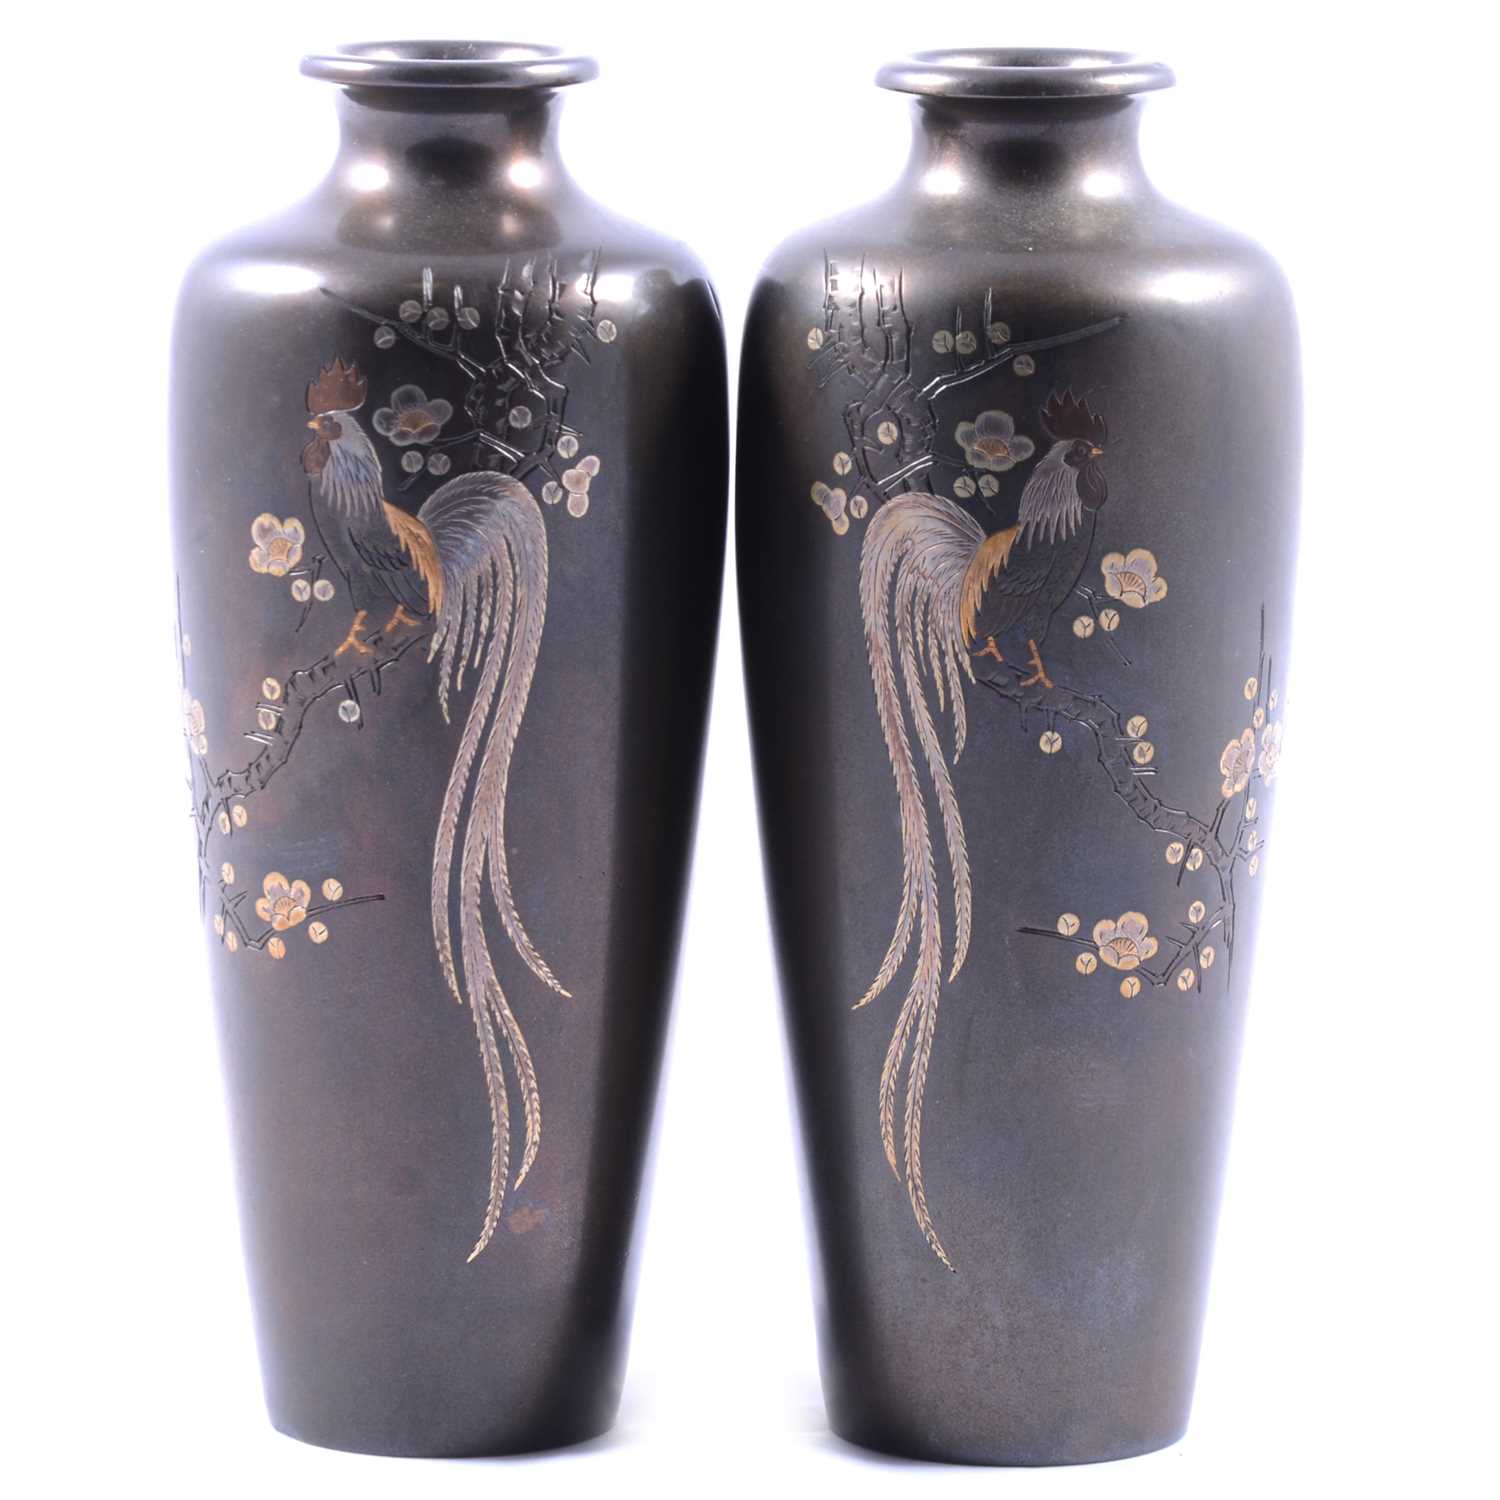 Pair of Japanese bronze vases, signed Mitsufune